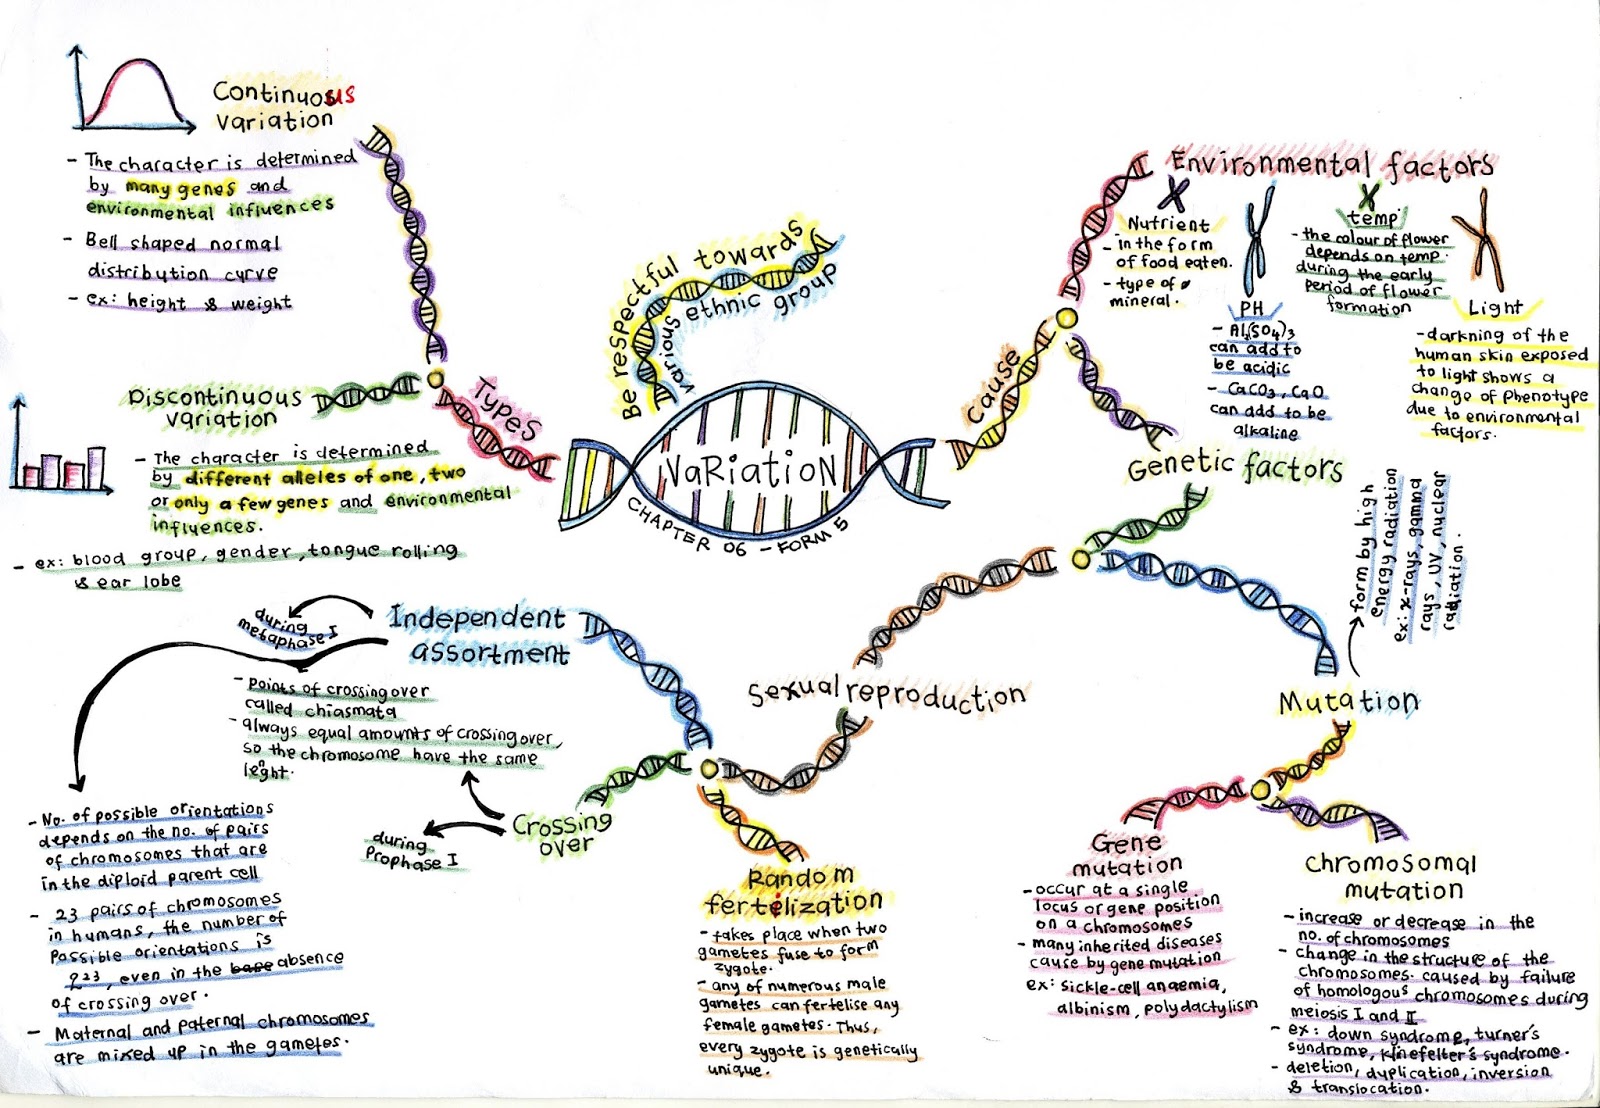 Biology A+: Nota Kreatif Biologi (Credit to Mr Shahril-Lizan)